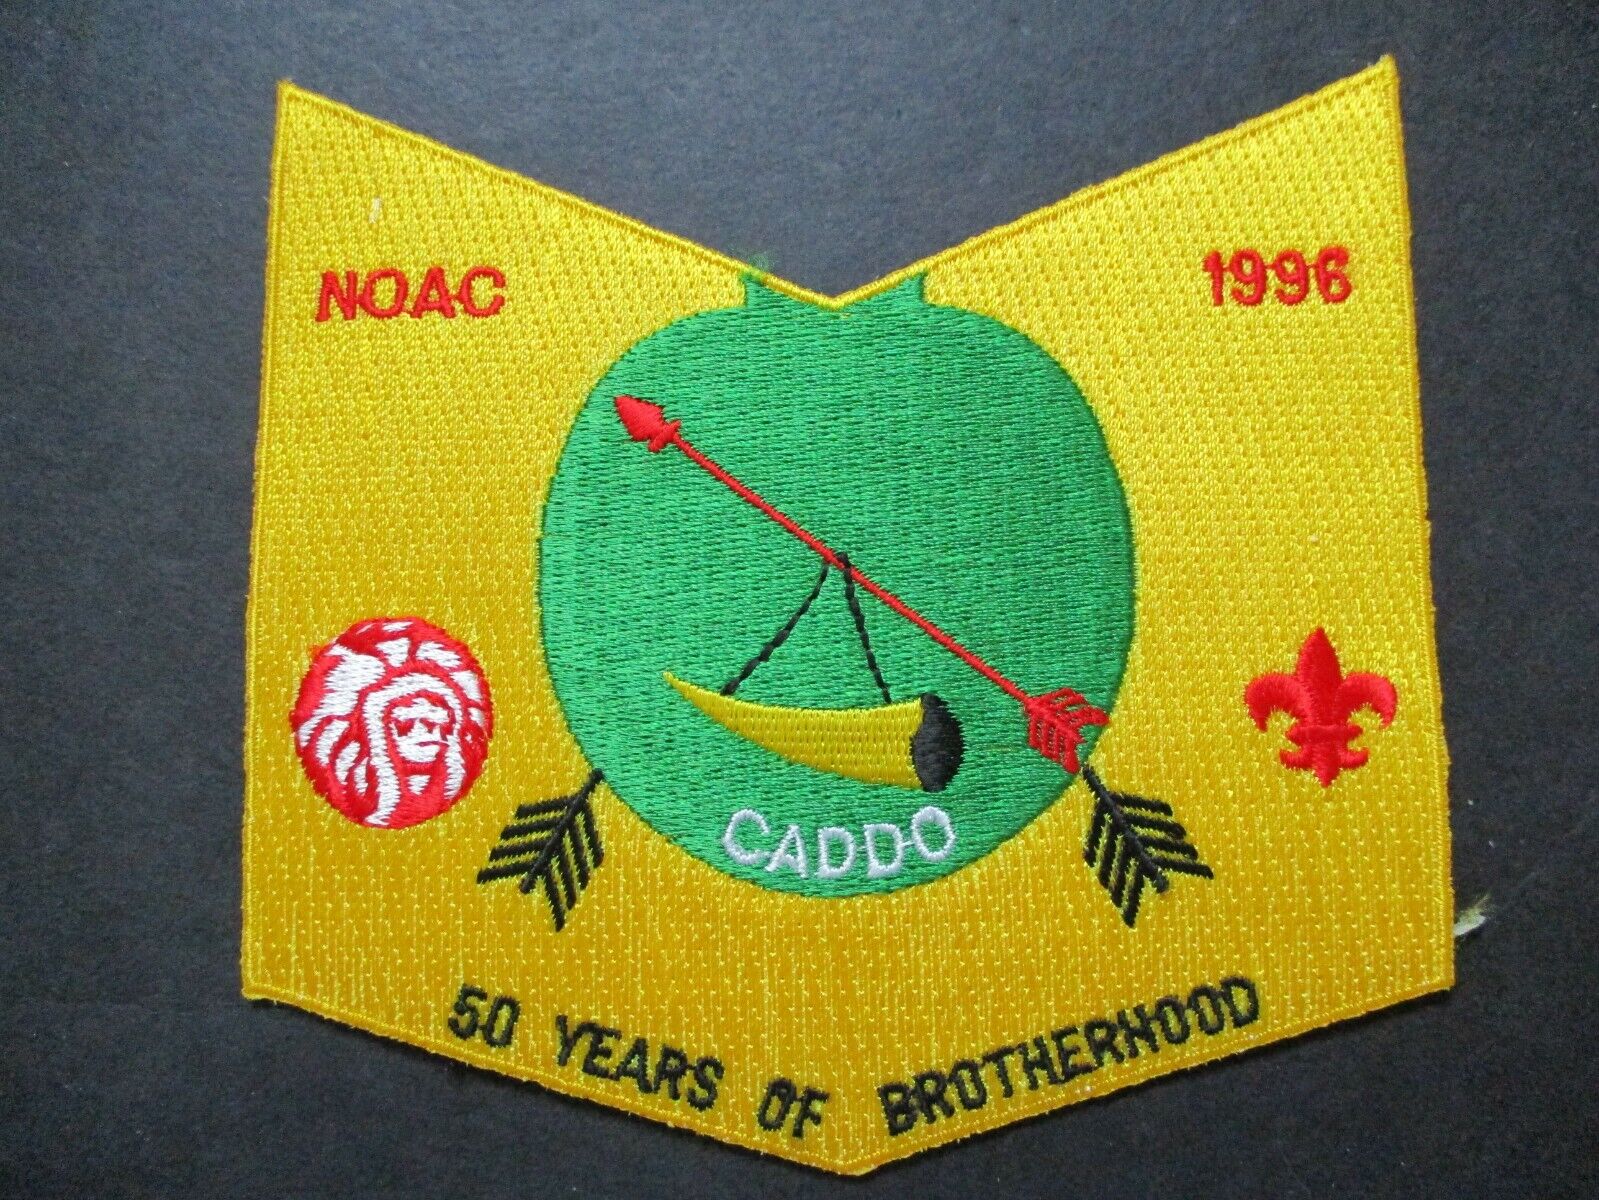 Caddo Noac 1996 50 Years of Brotherhood boy scout patch